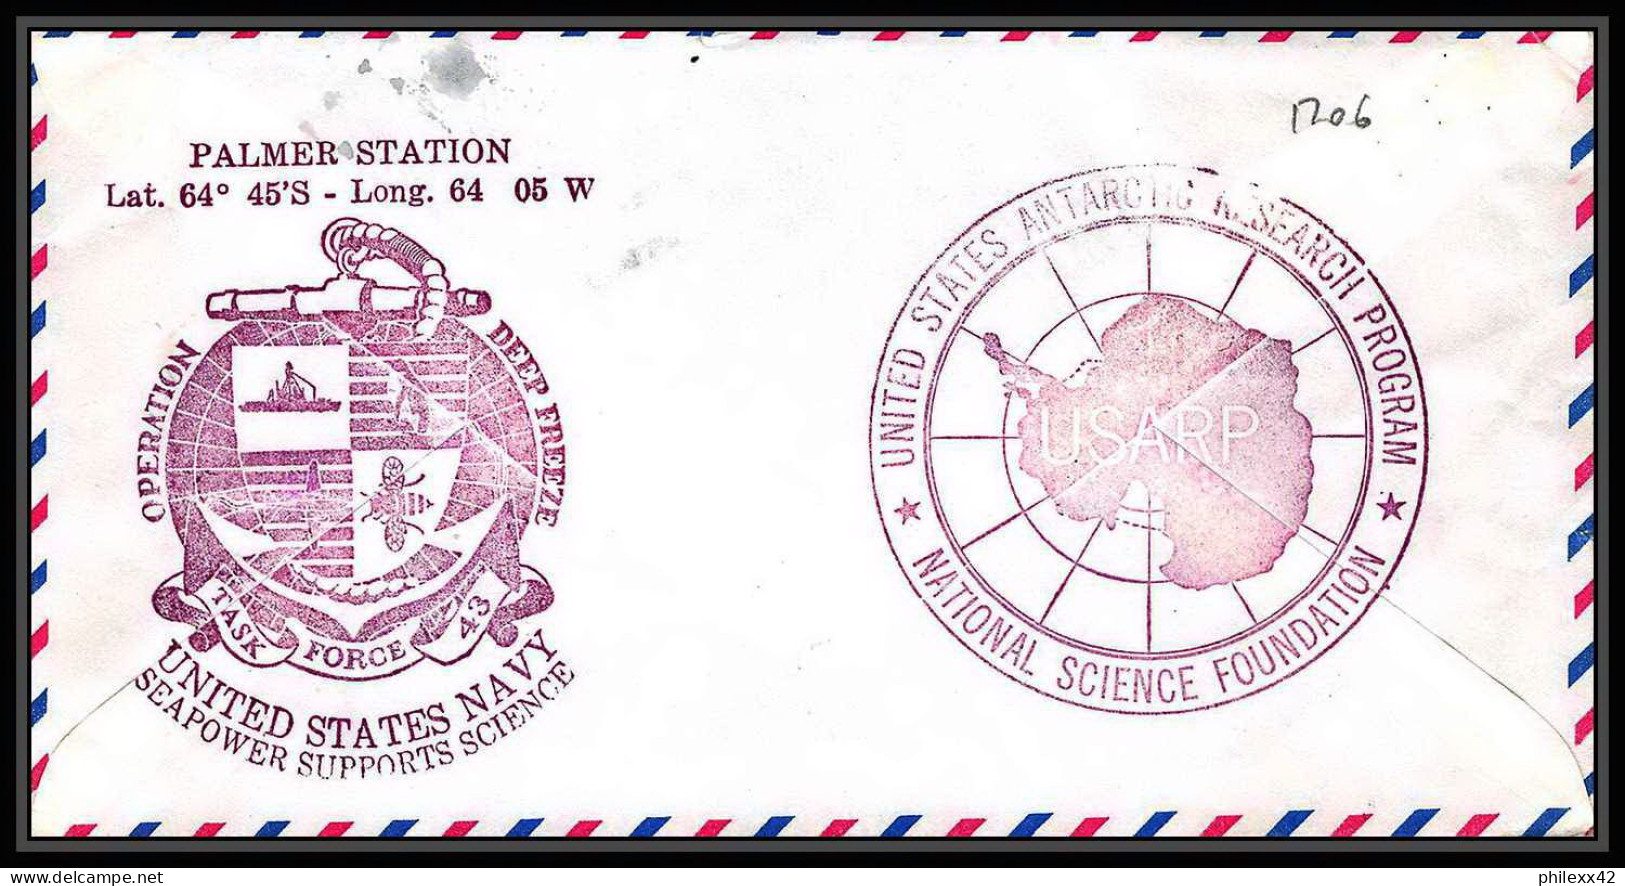 1206 Usa Enveloppe Lettre Cover Ship Hero 1972 Antarctic - Antarctische Expedities